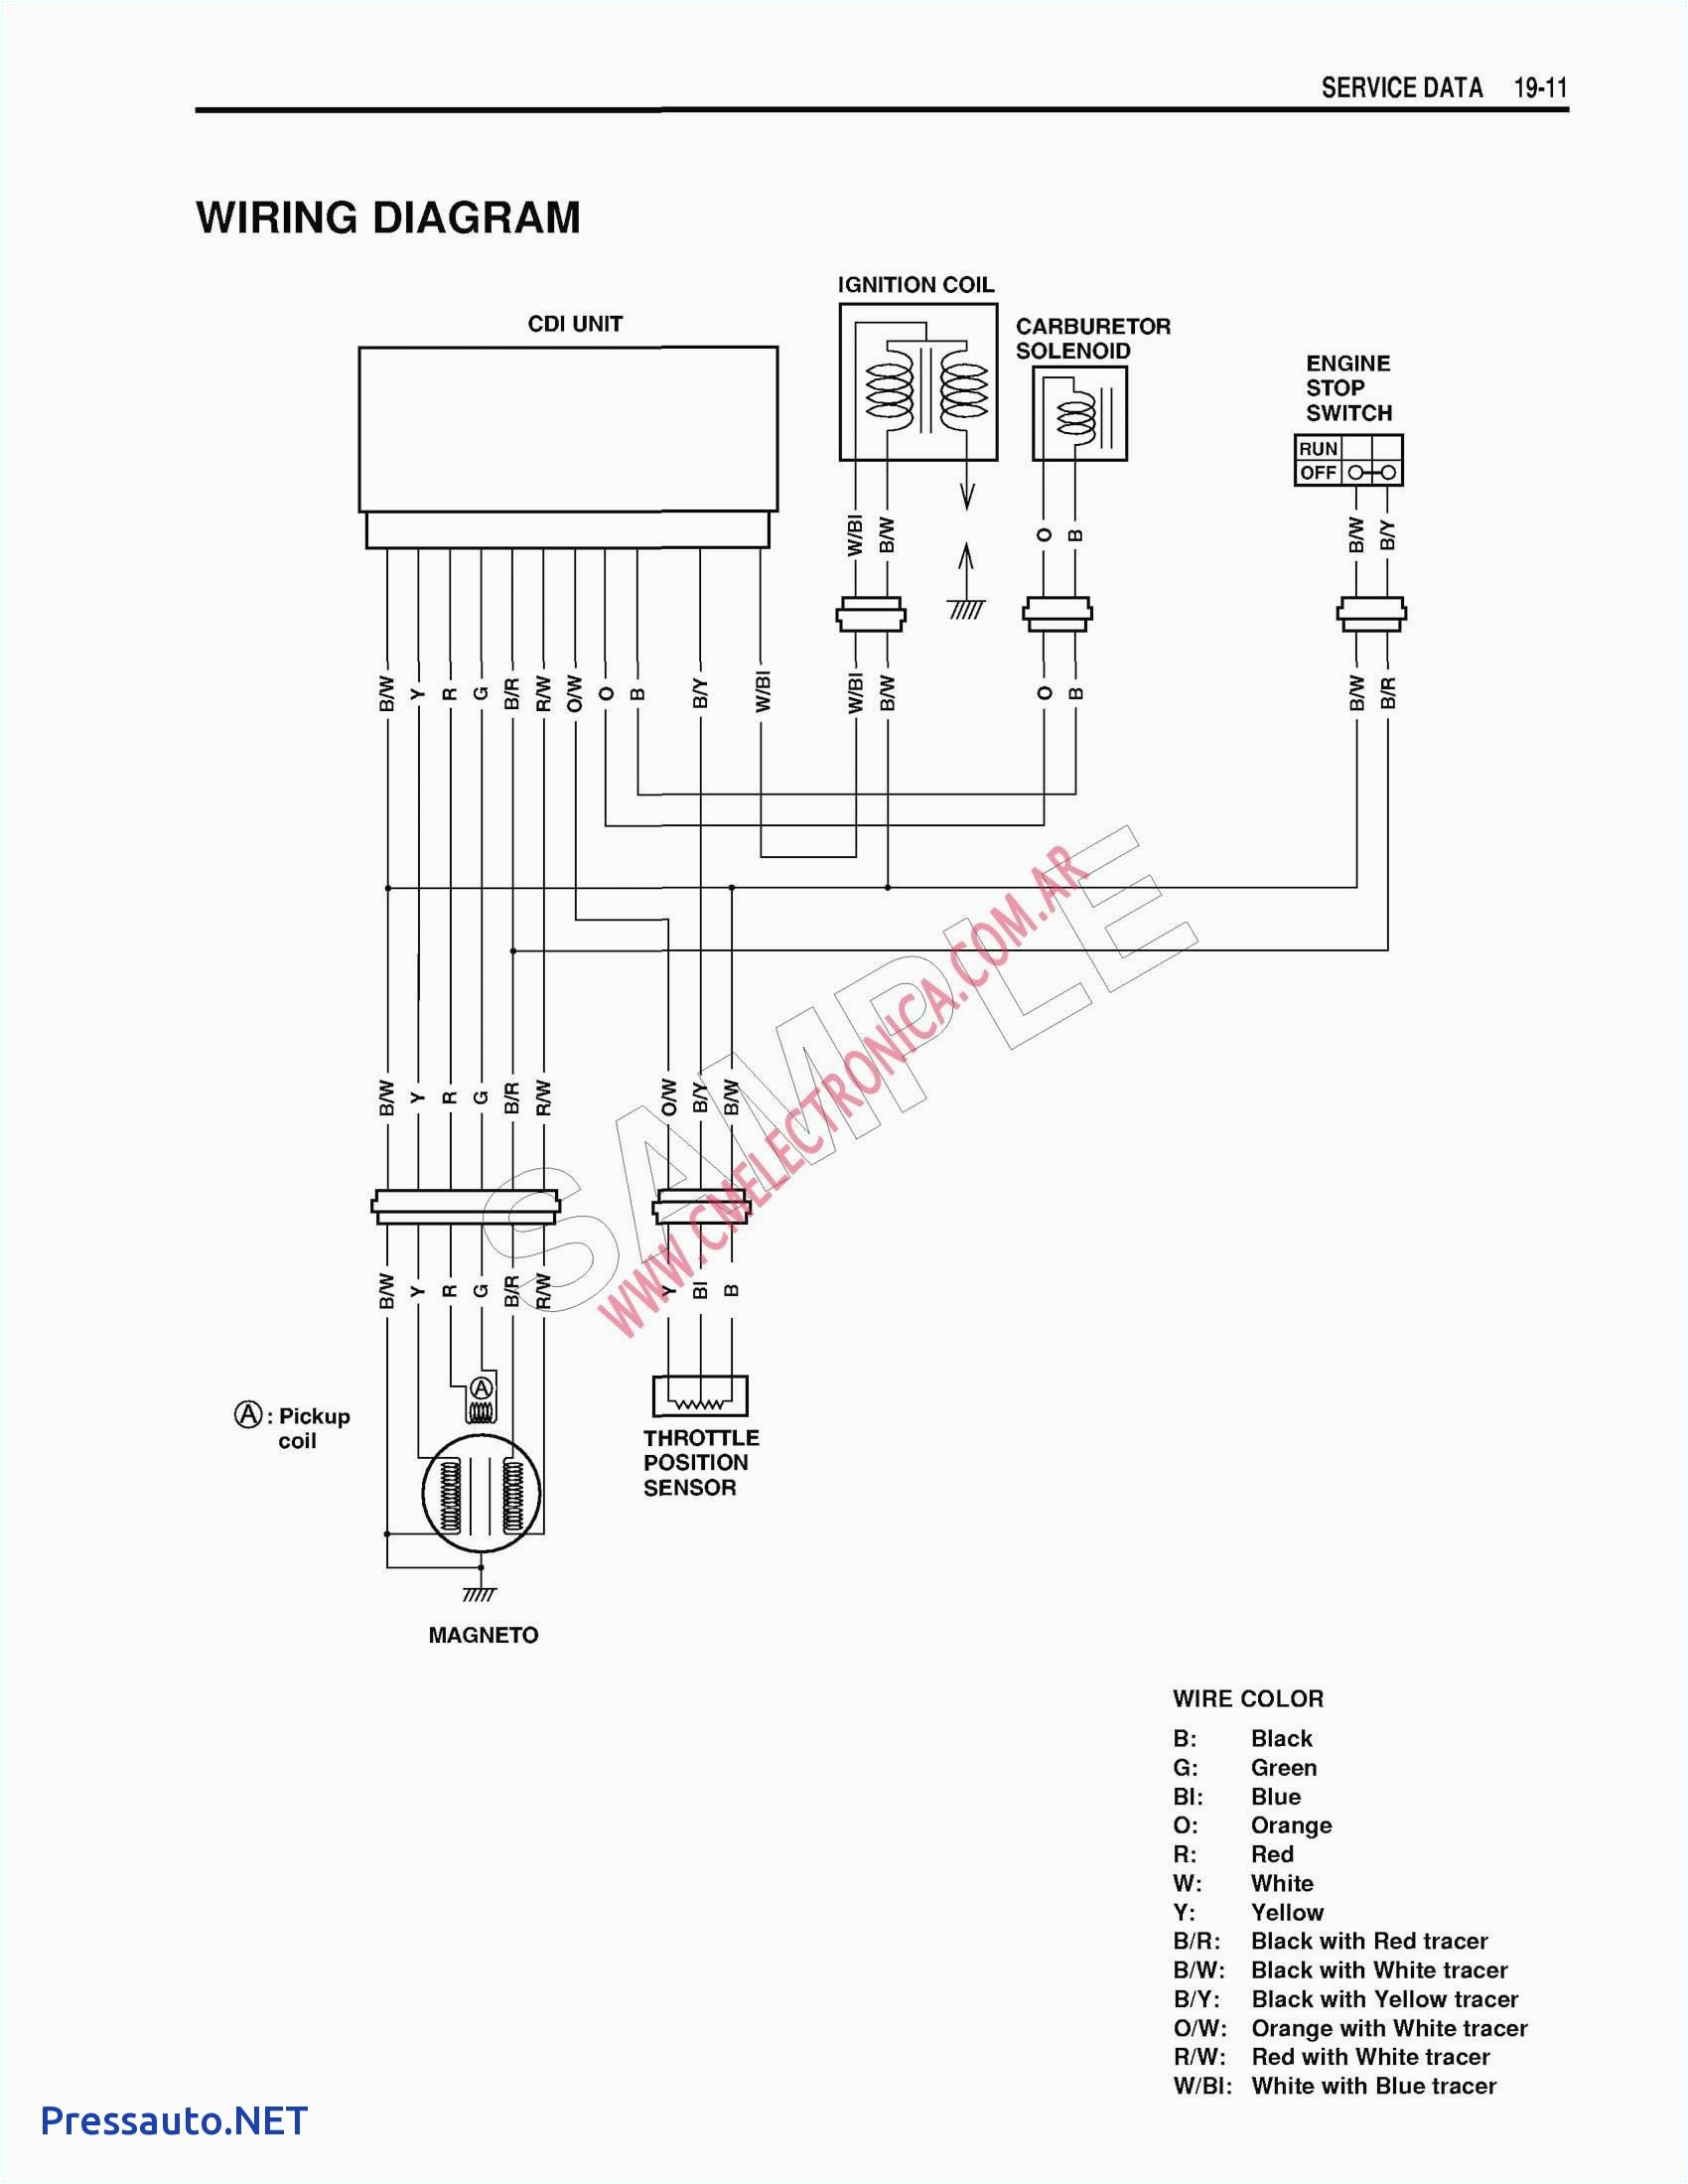 dc cdi ignition wiring diagram wiring diagram hetwiring diagram likewise cdi ignition circuit on dc cdi